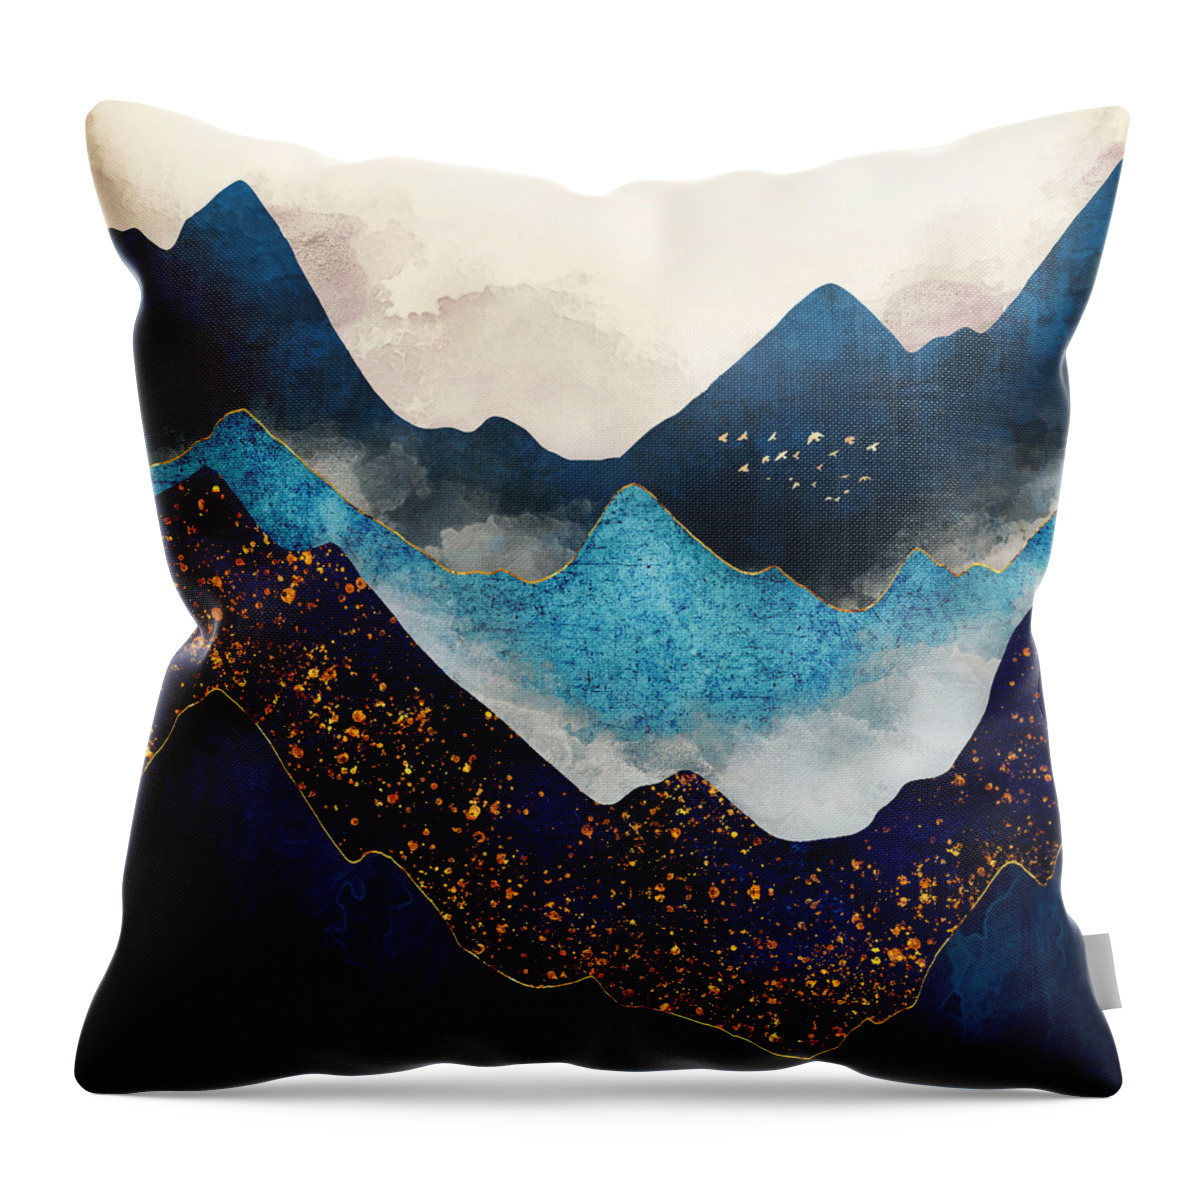 Indigo Throw Pillow featuring the digital art Indigo Peaks by Spacefrog Designs